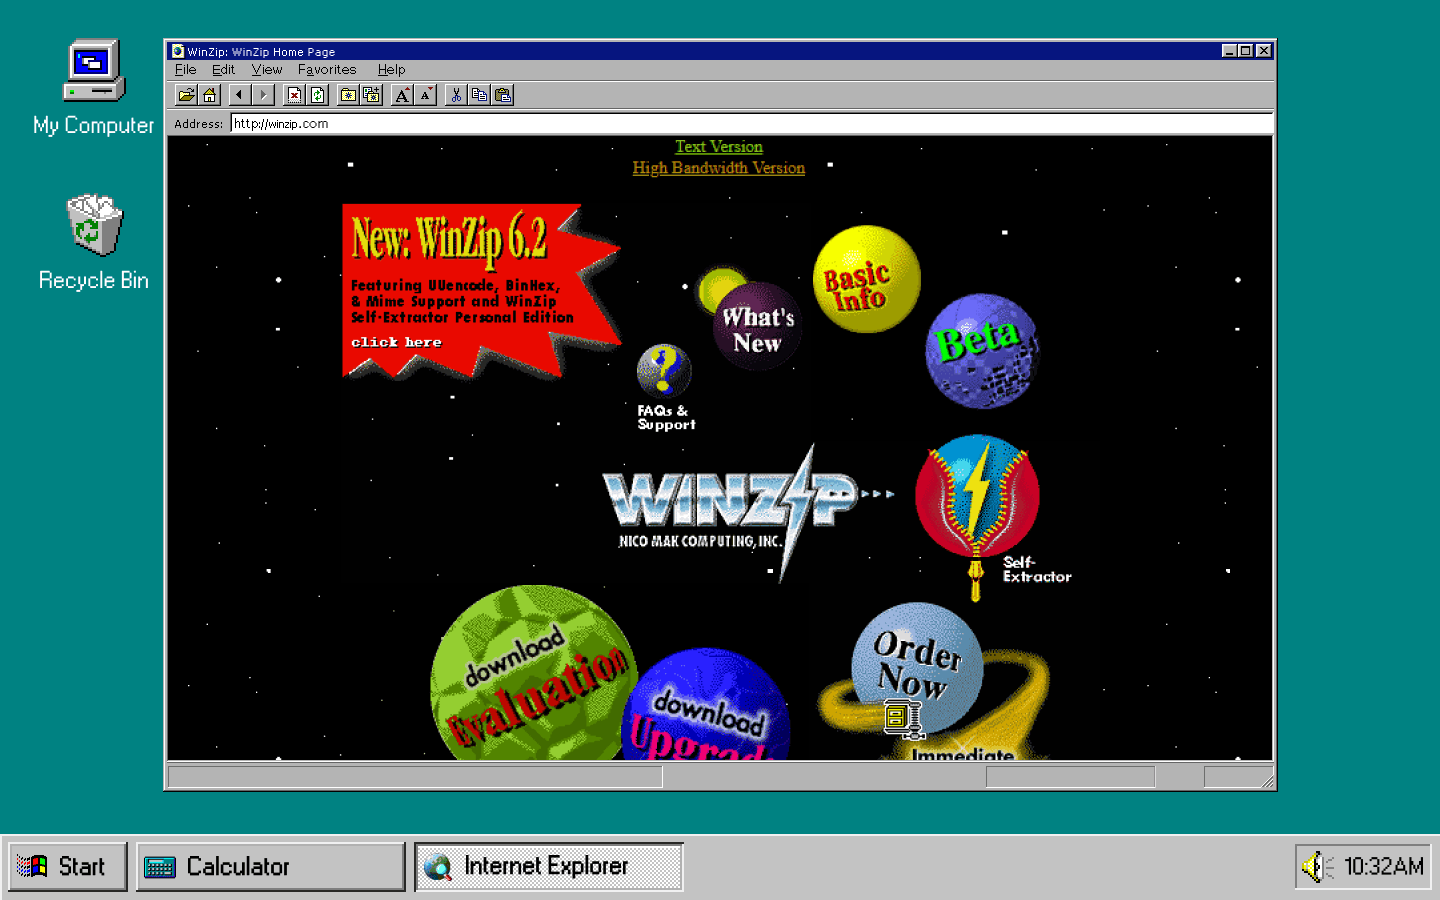 DCB 1997 - WinZip.com